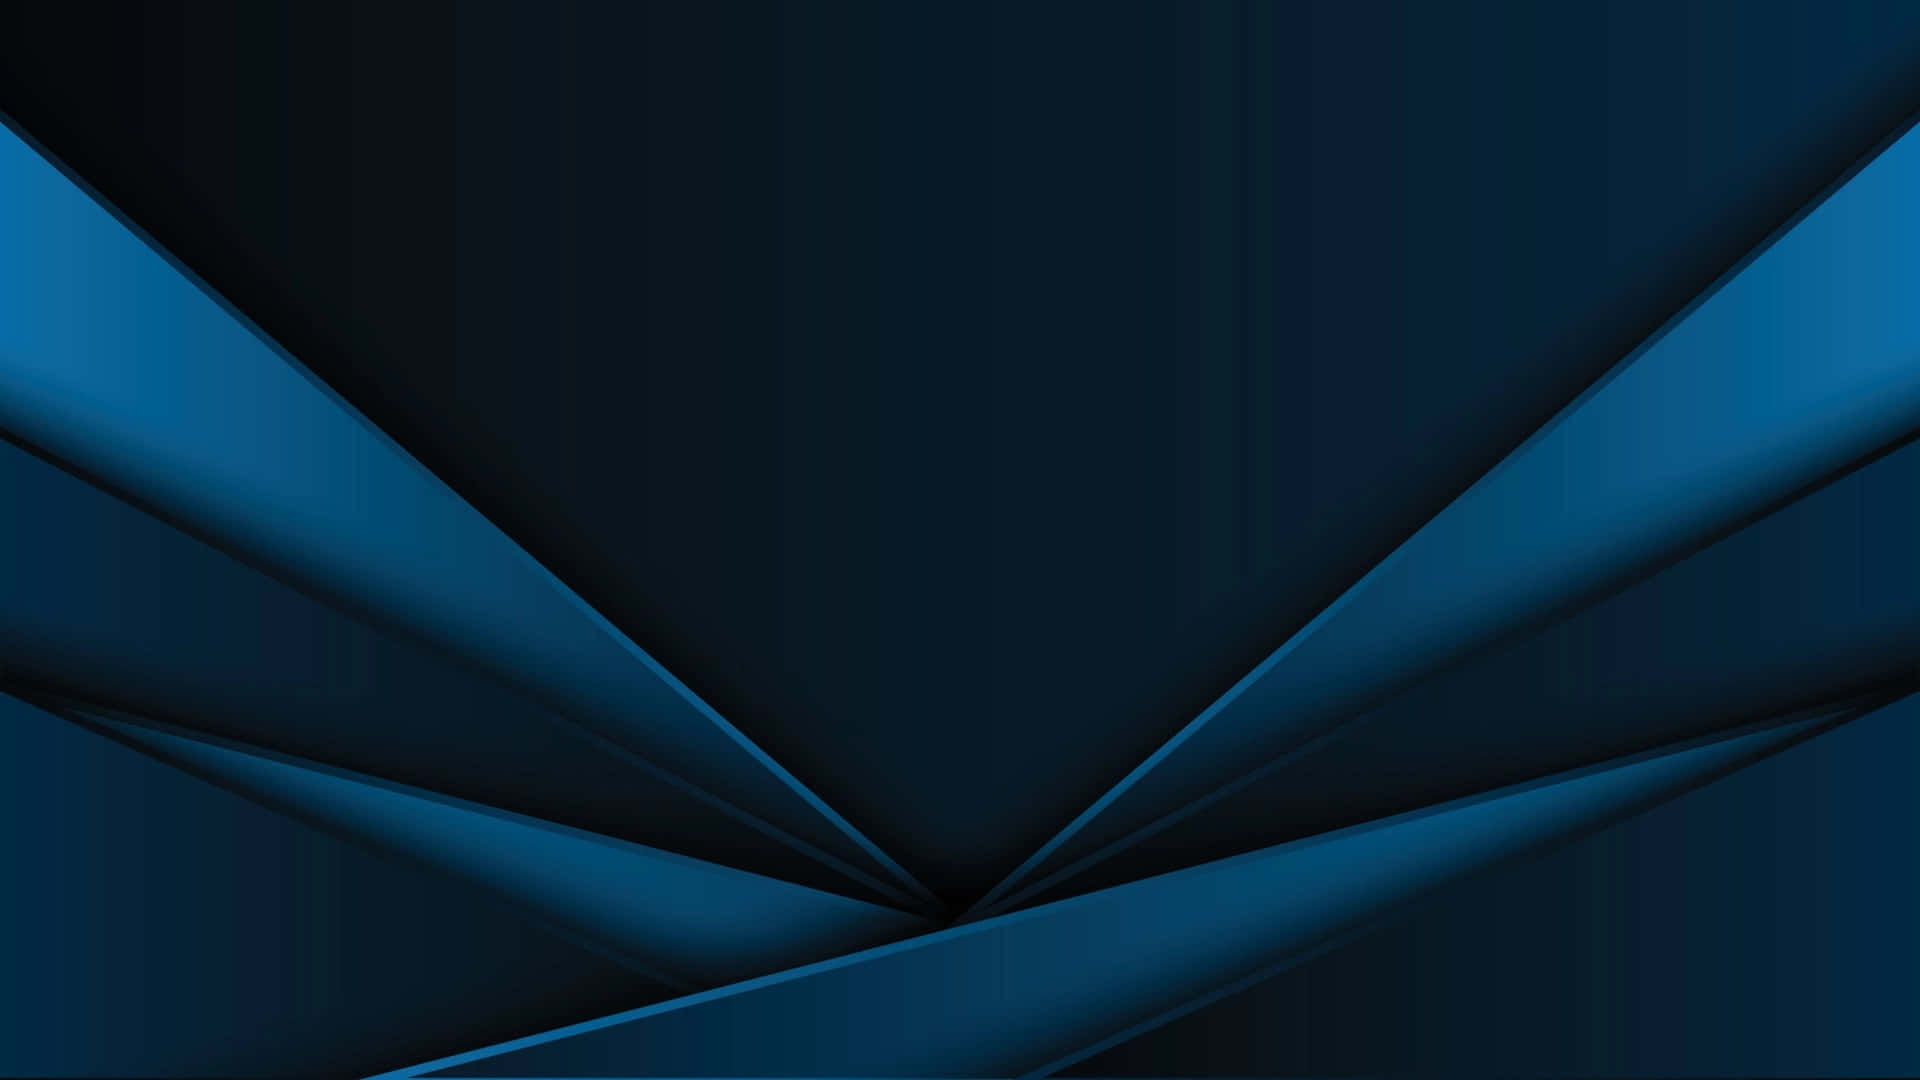 Navy Blue Background With Elegant Material Design